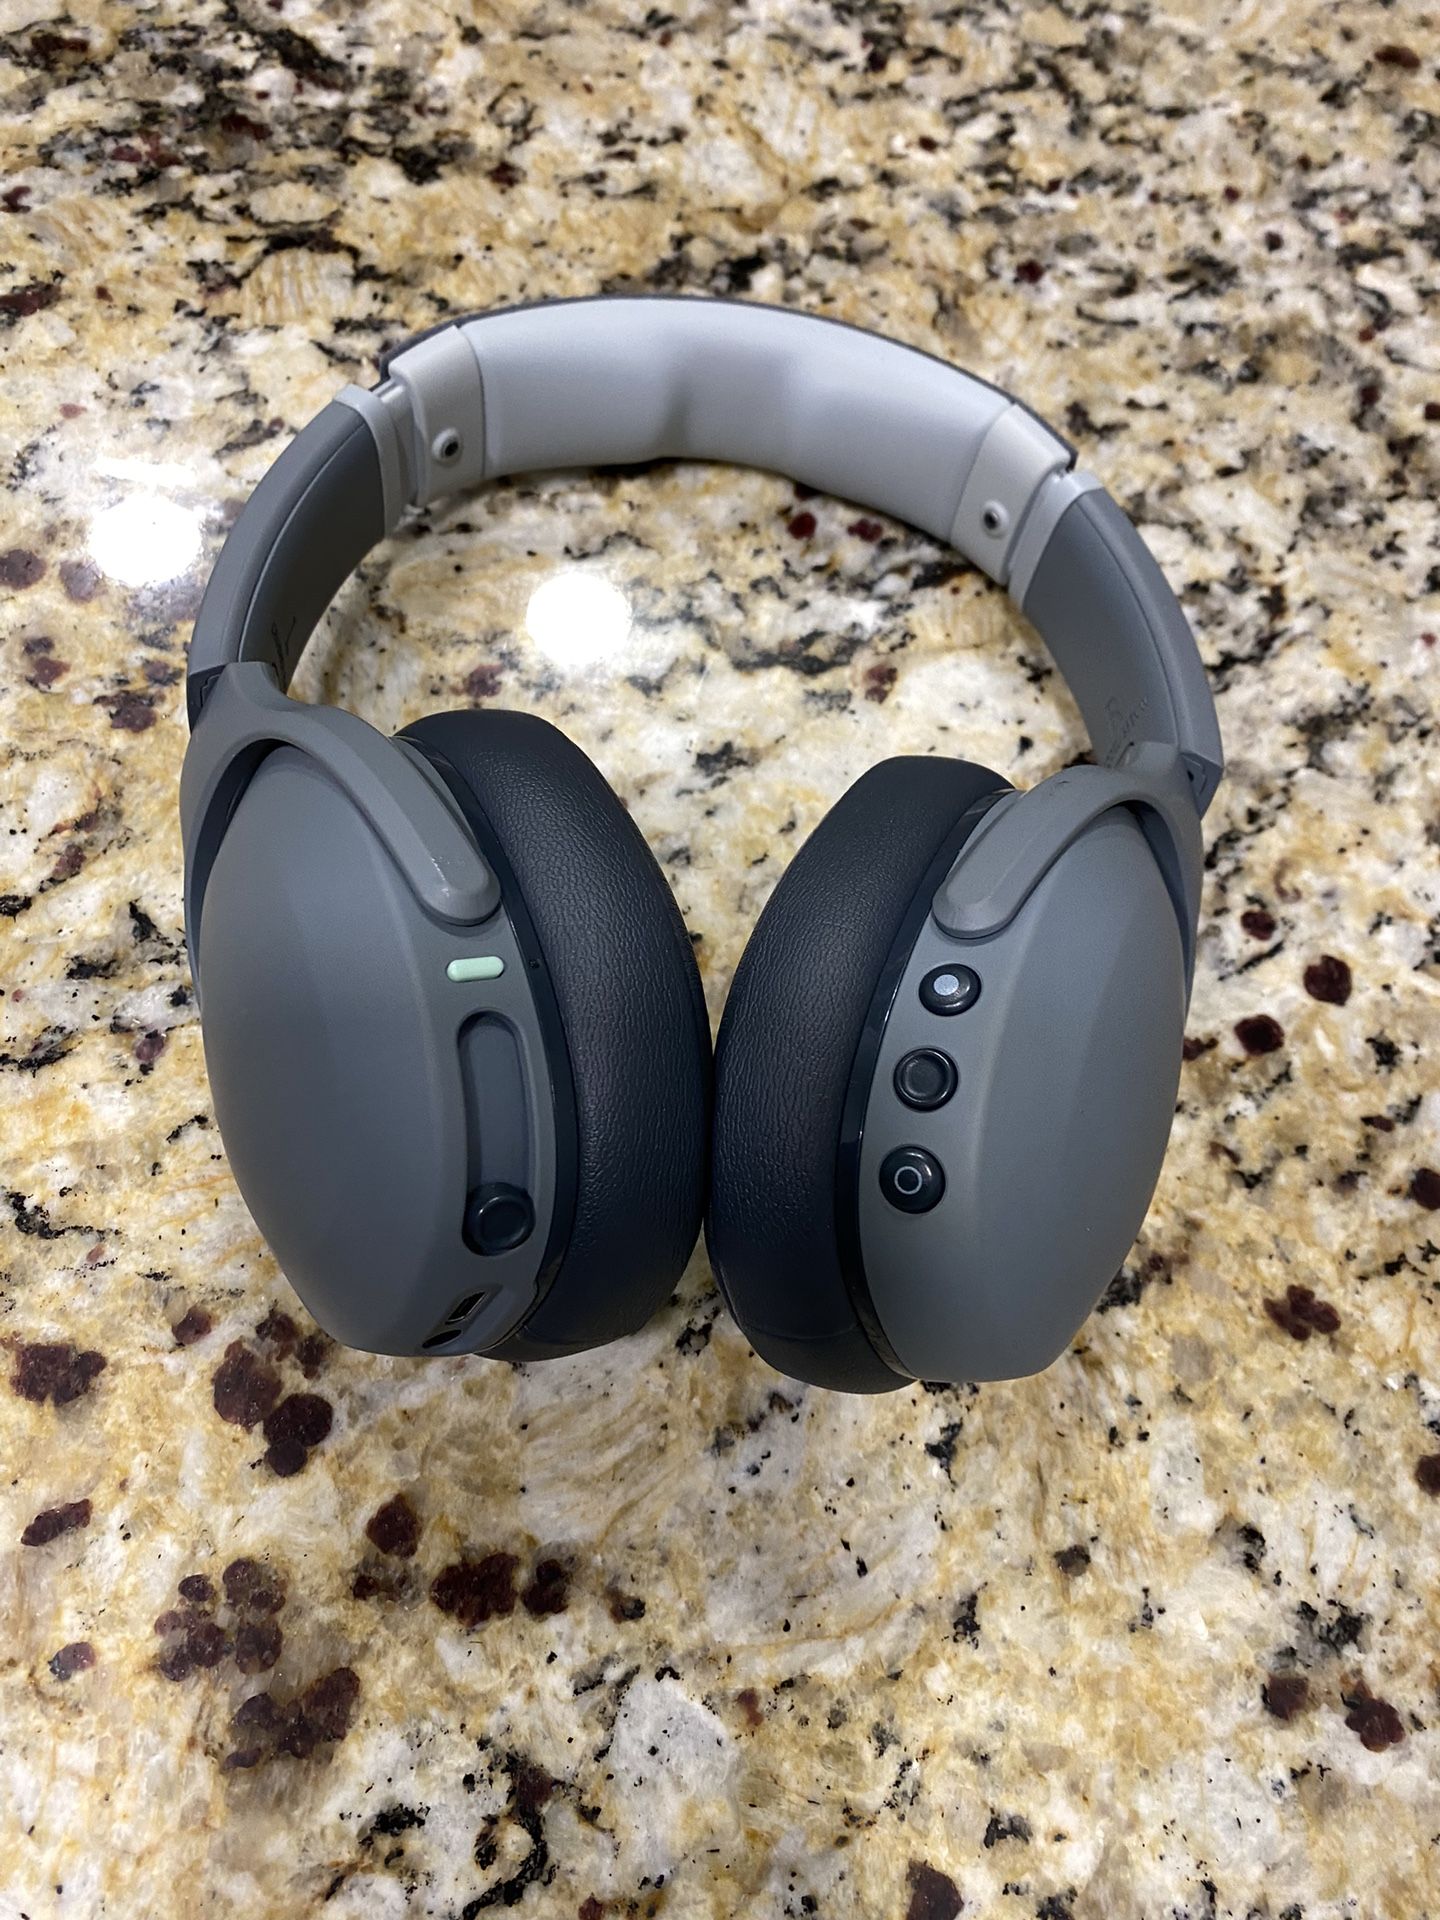 skullcandy Evo Crusher Headphones Like New 